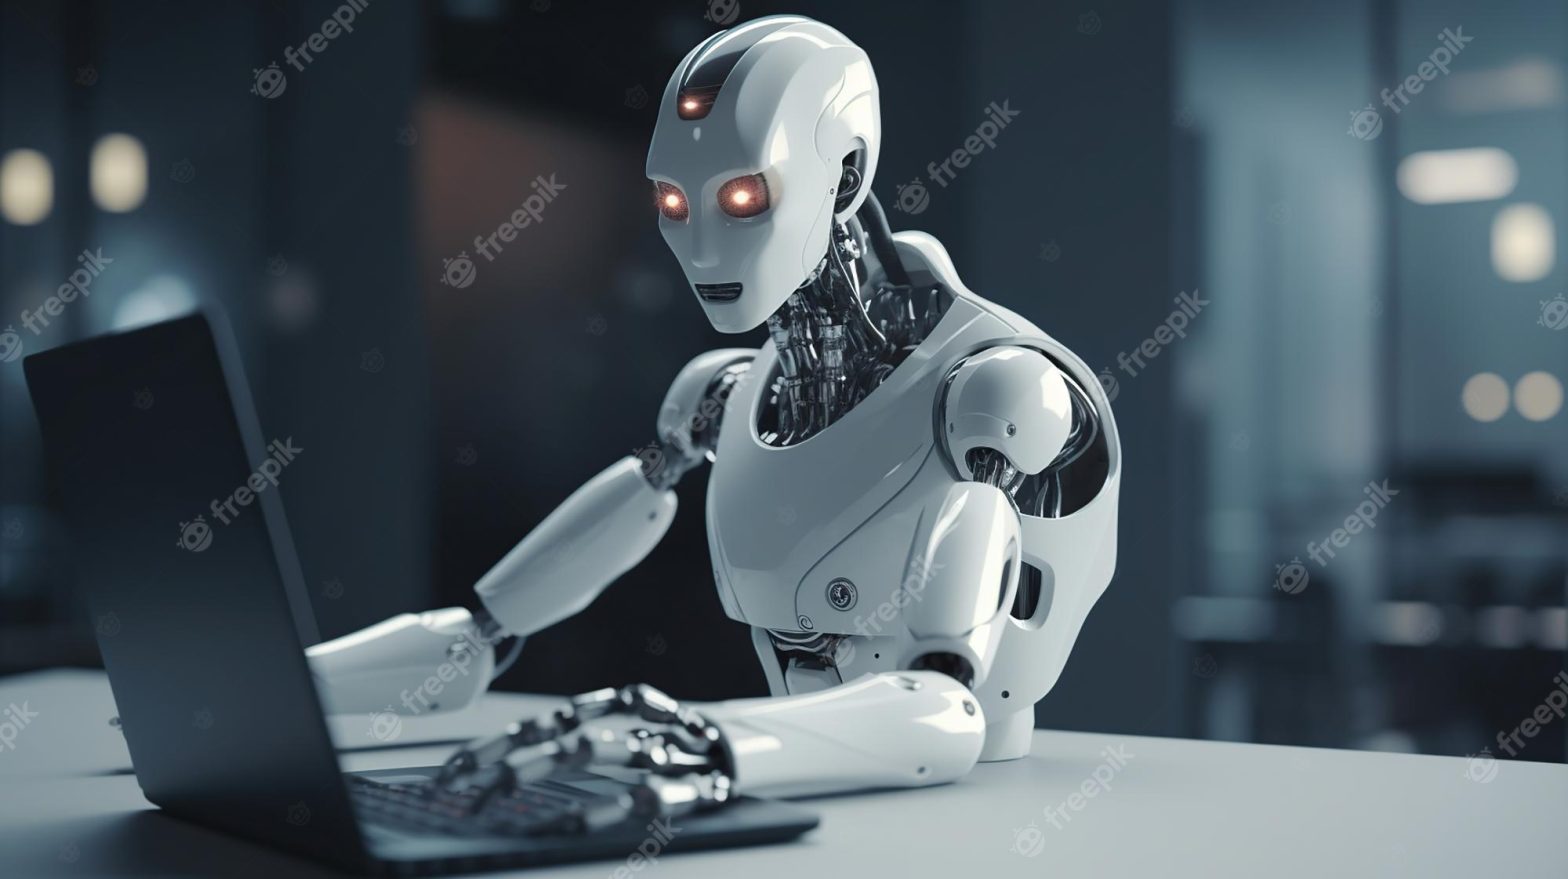 Is Robo-Advisor a Chatbot?